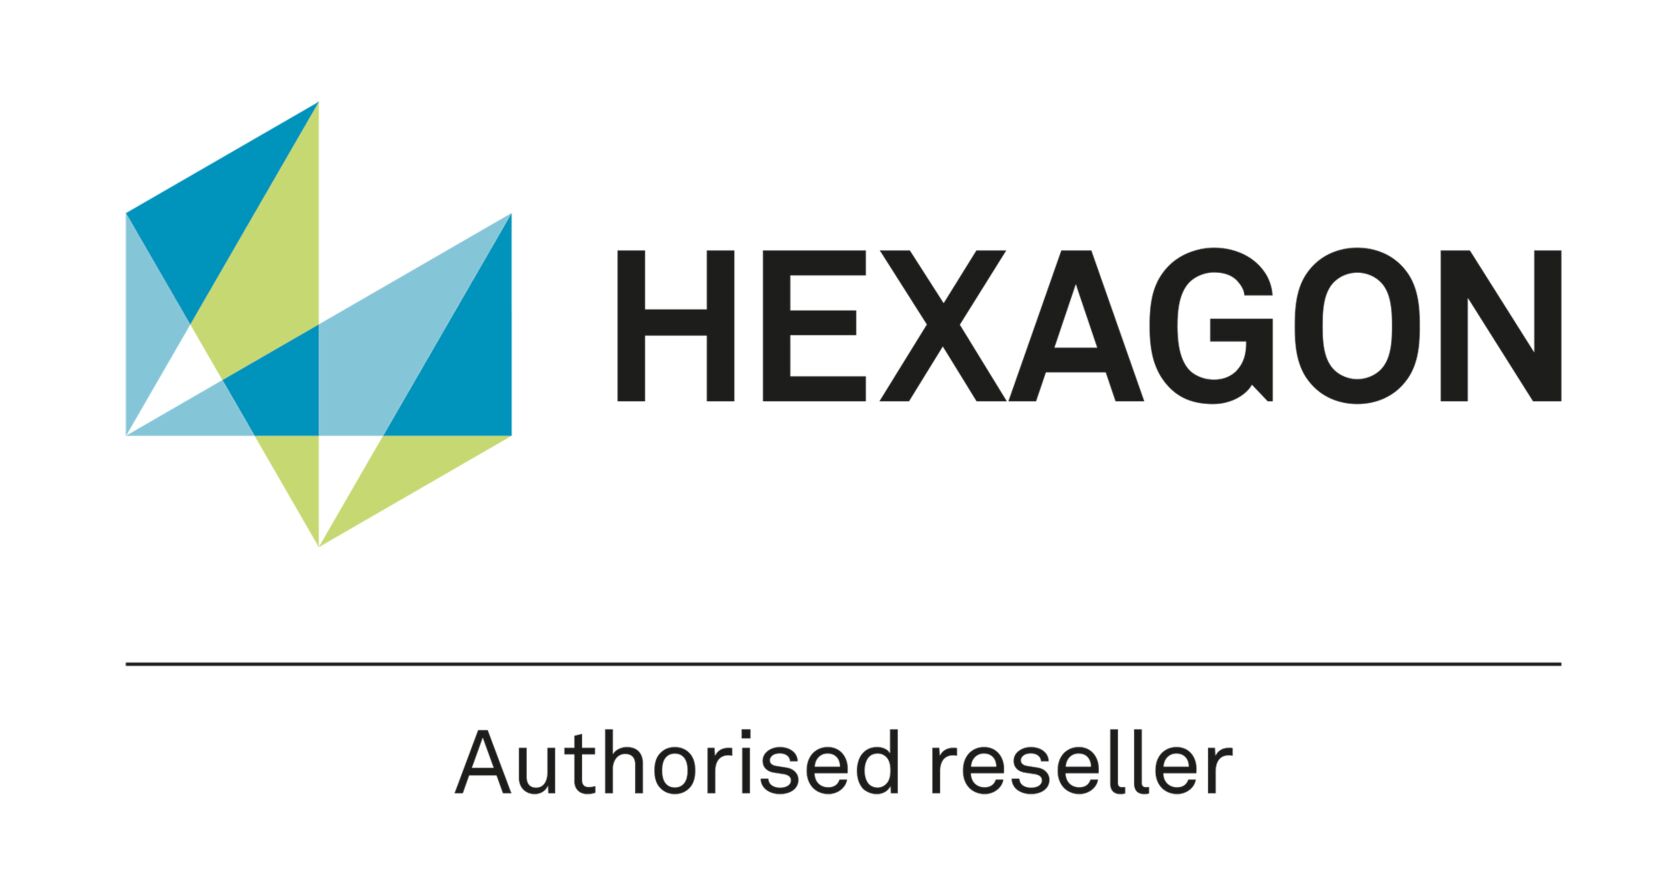 Hexagon Authorised reseller Australia